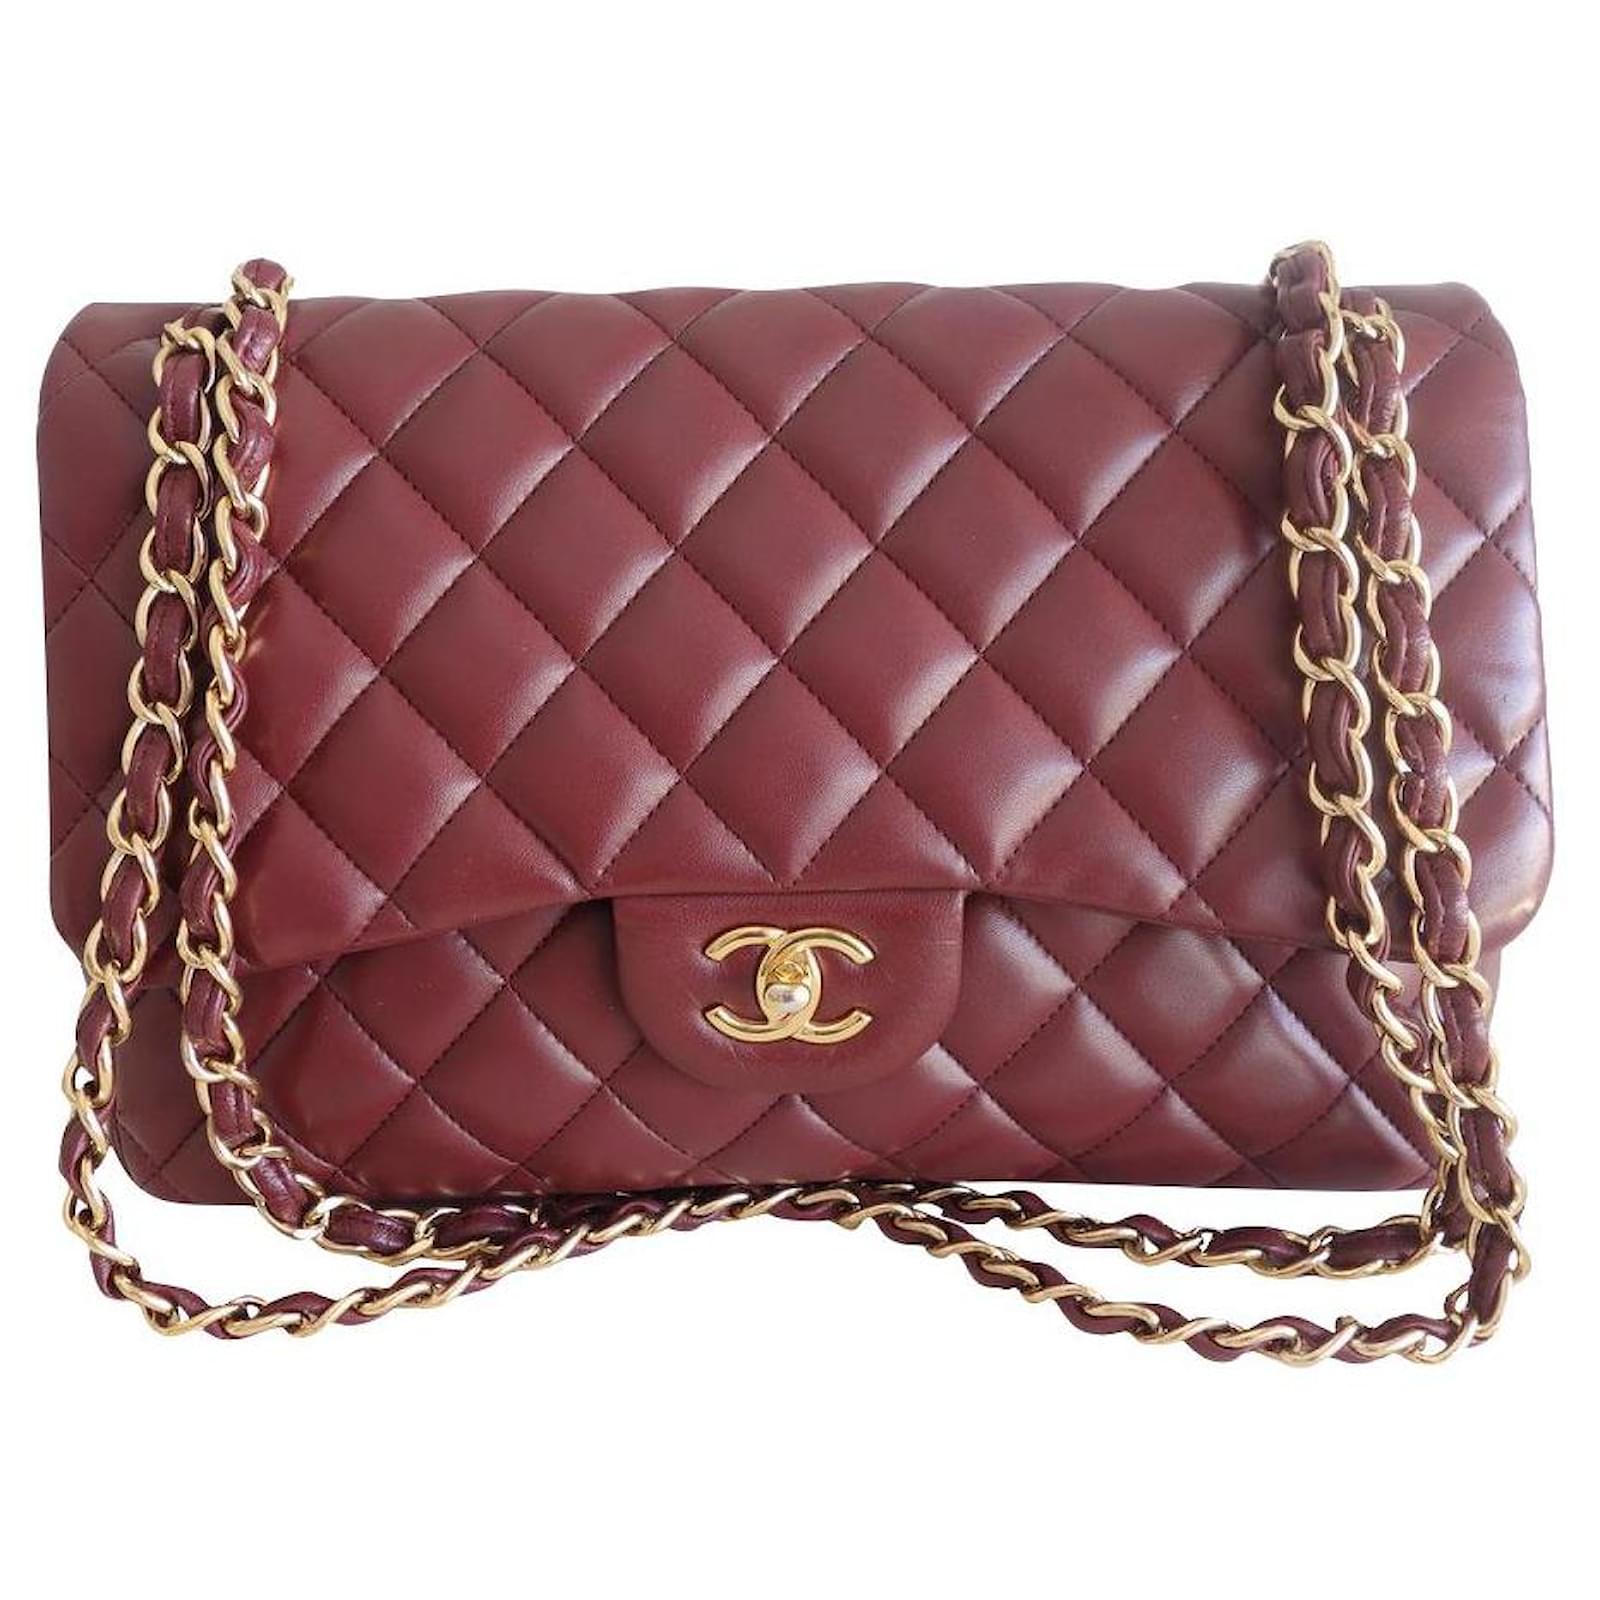 Handbags Chanel Classic Chanel Bag GM Burgundy